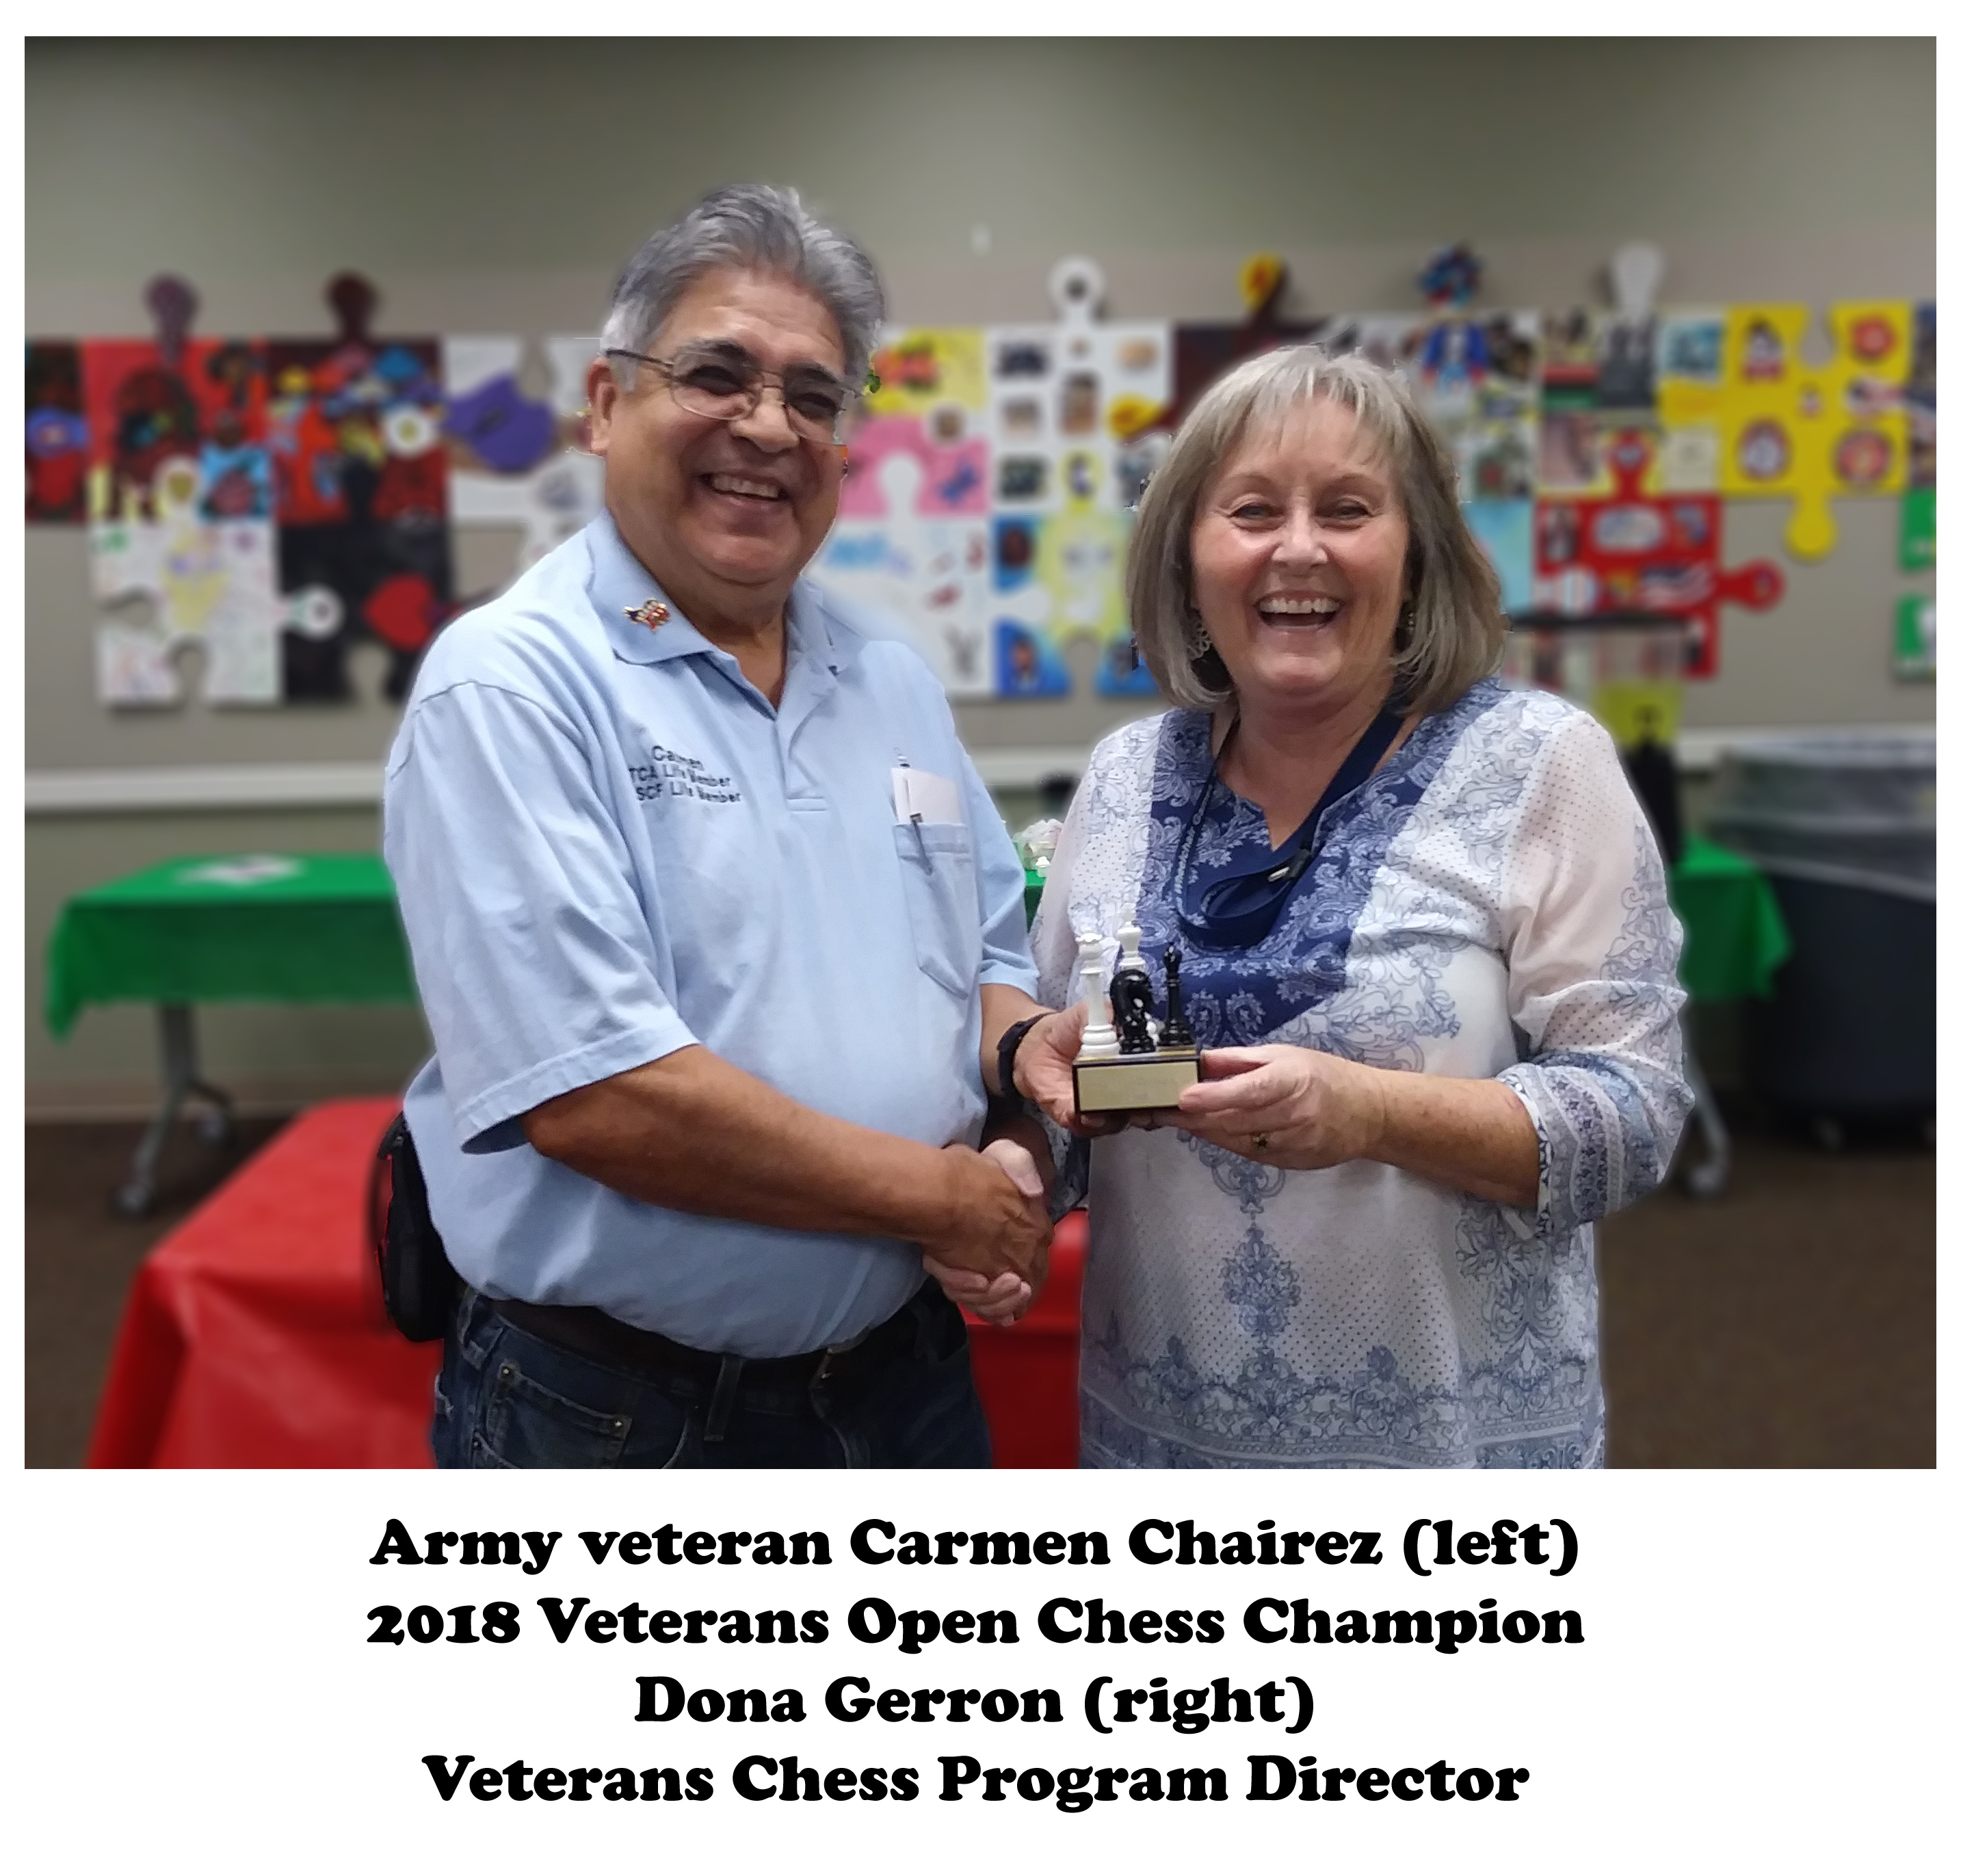 Army veteran Carmen Chairez won Top Veterans Open Championship Honors